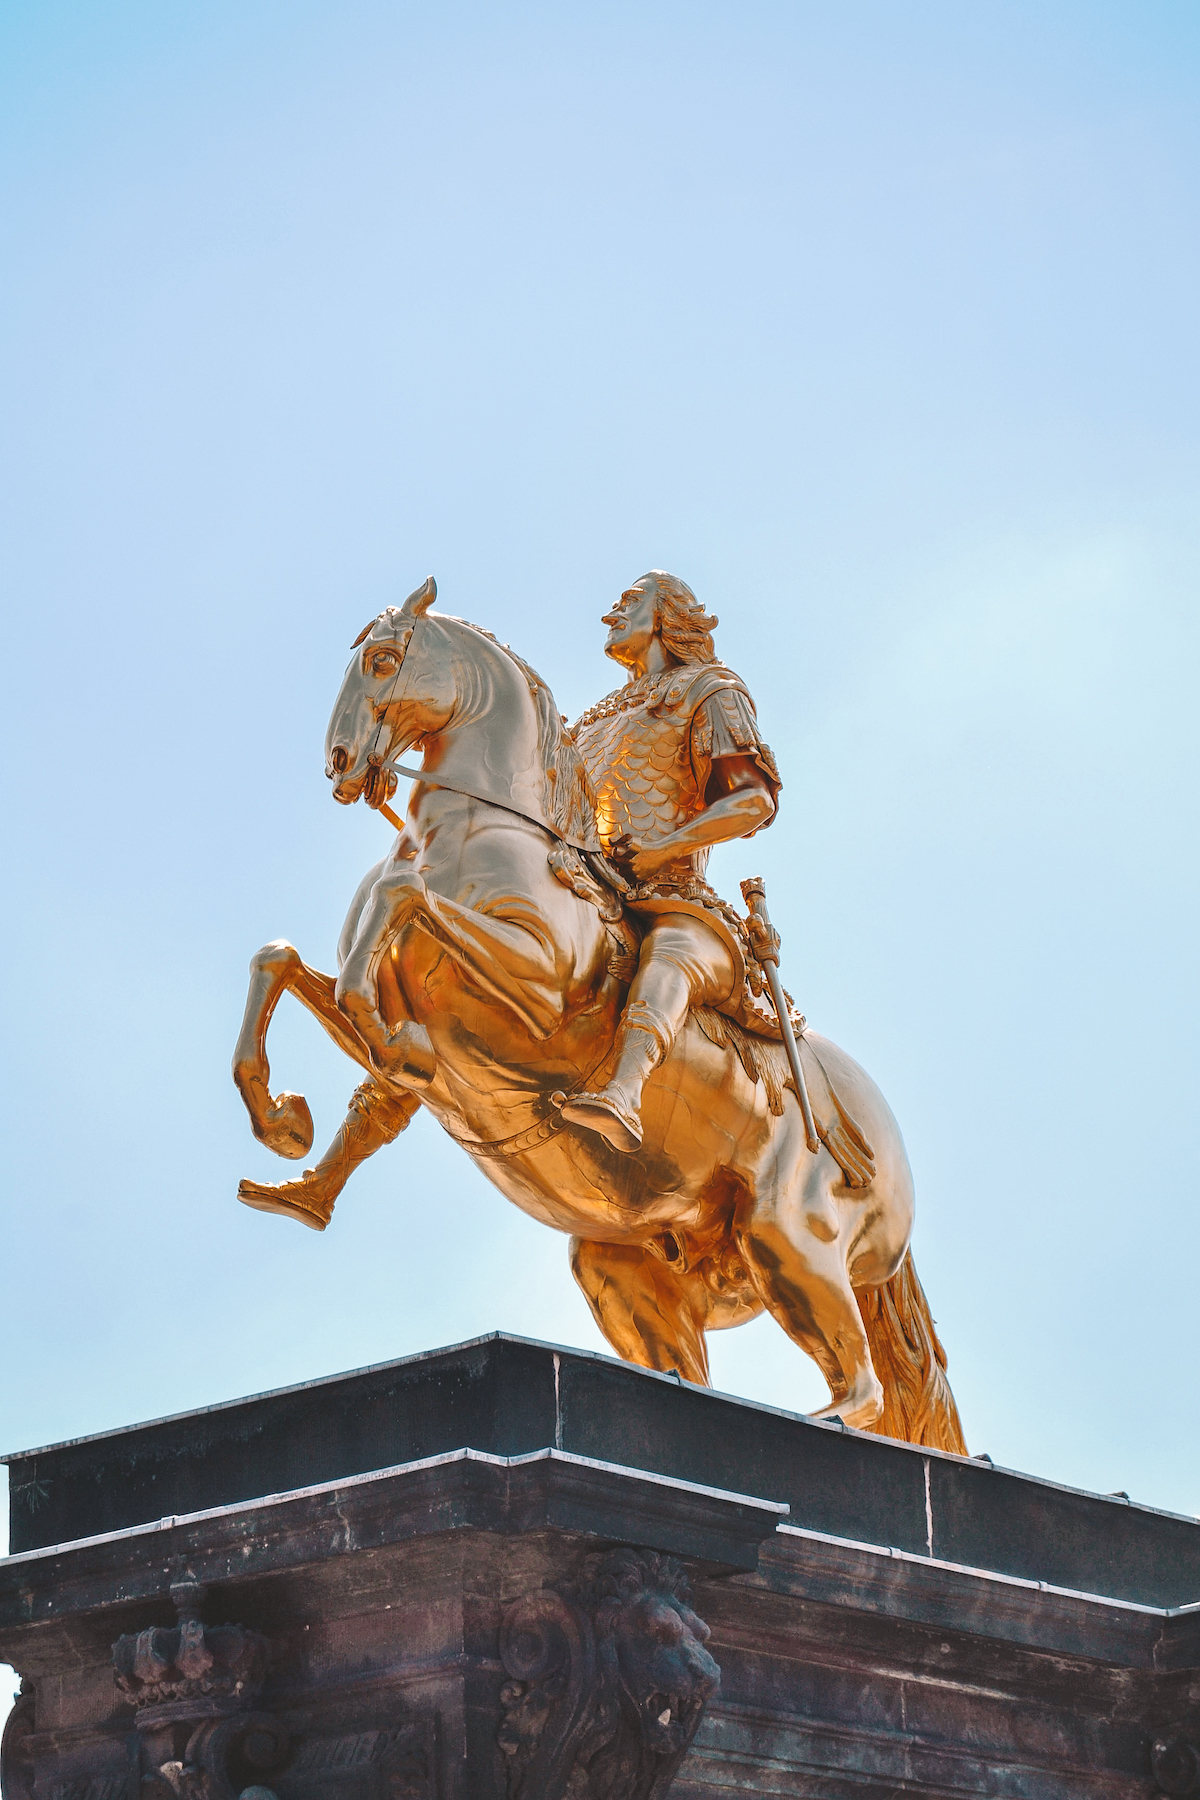 The "Golden Rider" statue in Dresden Neustadt 